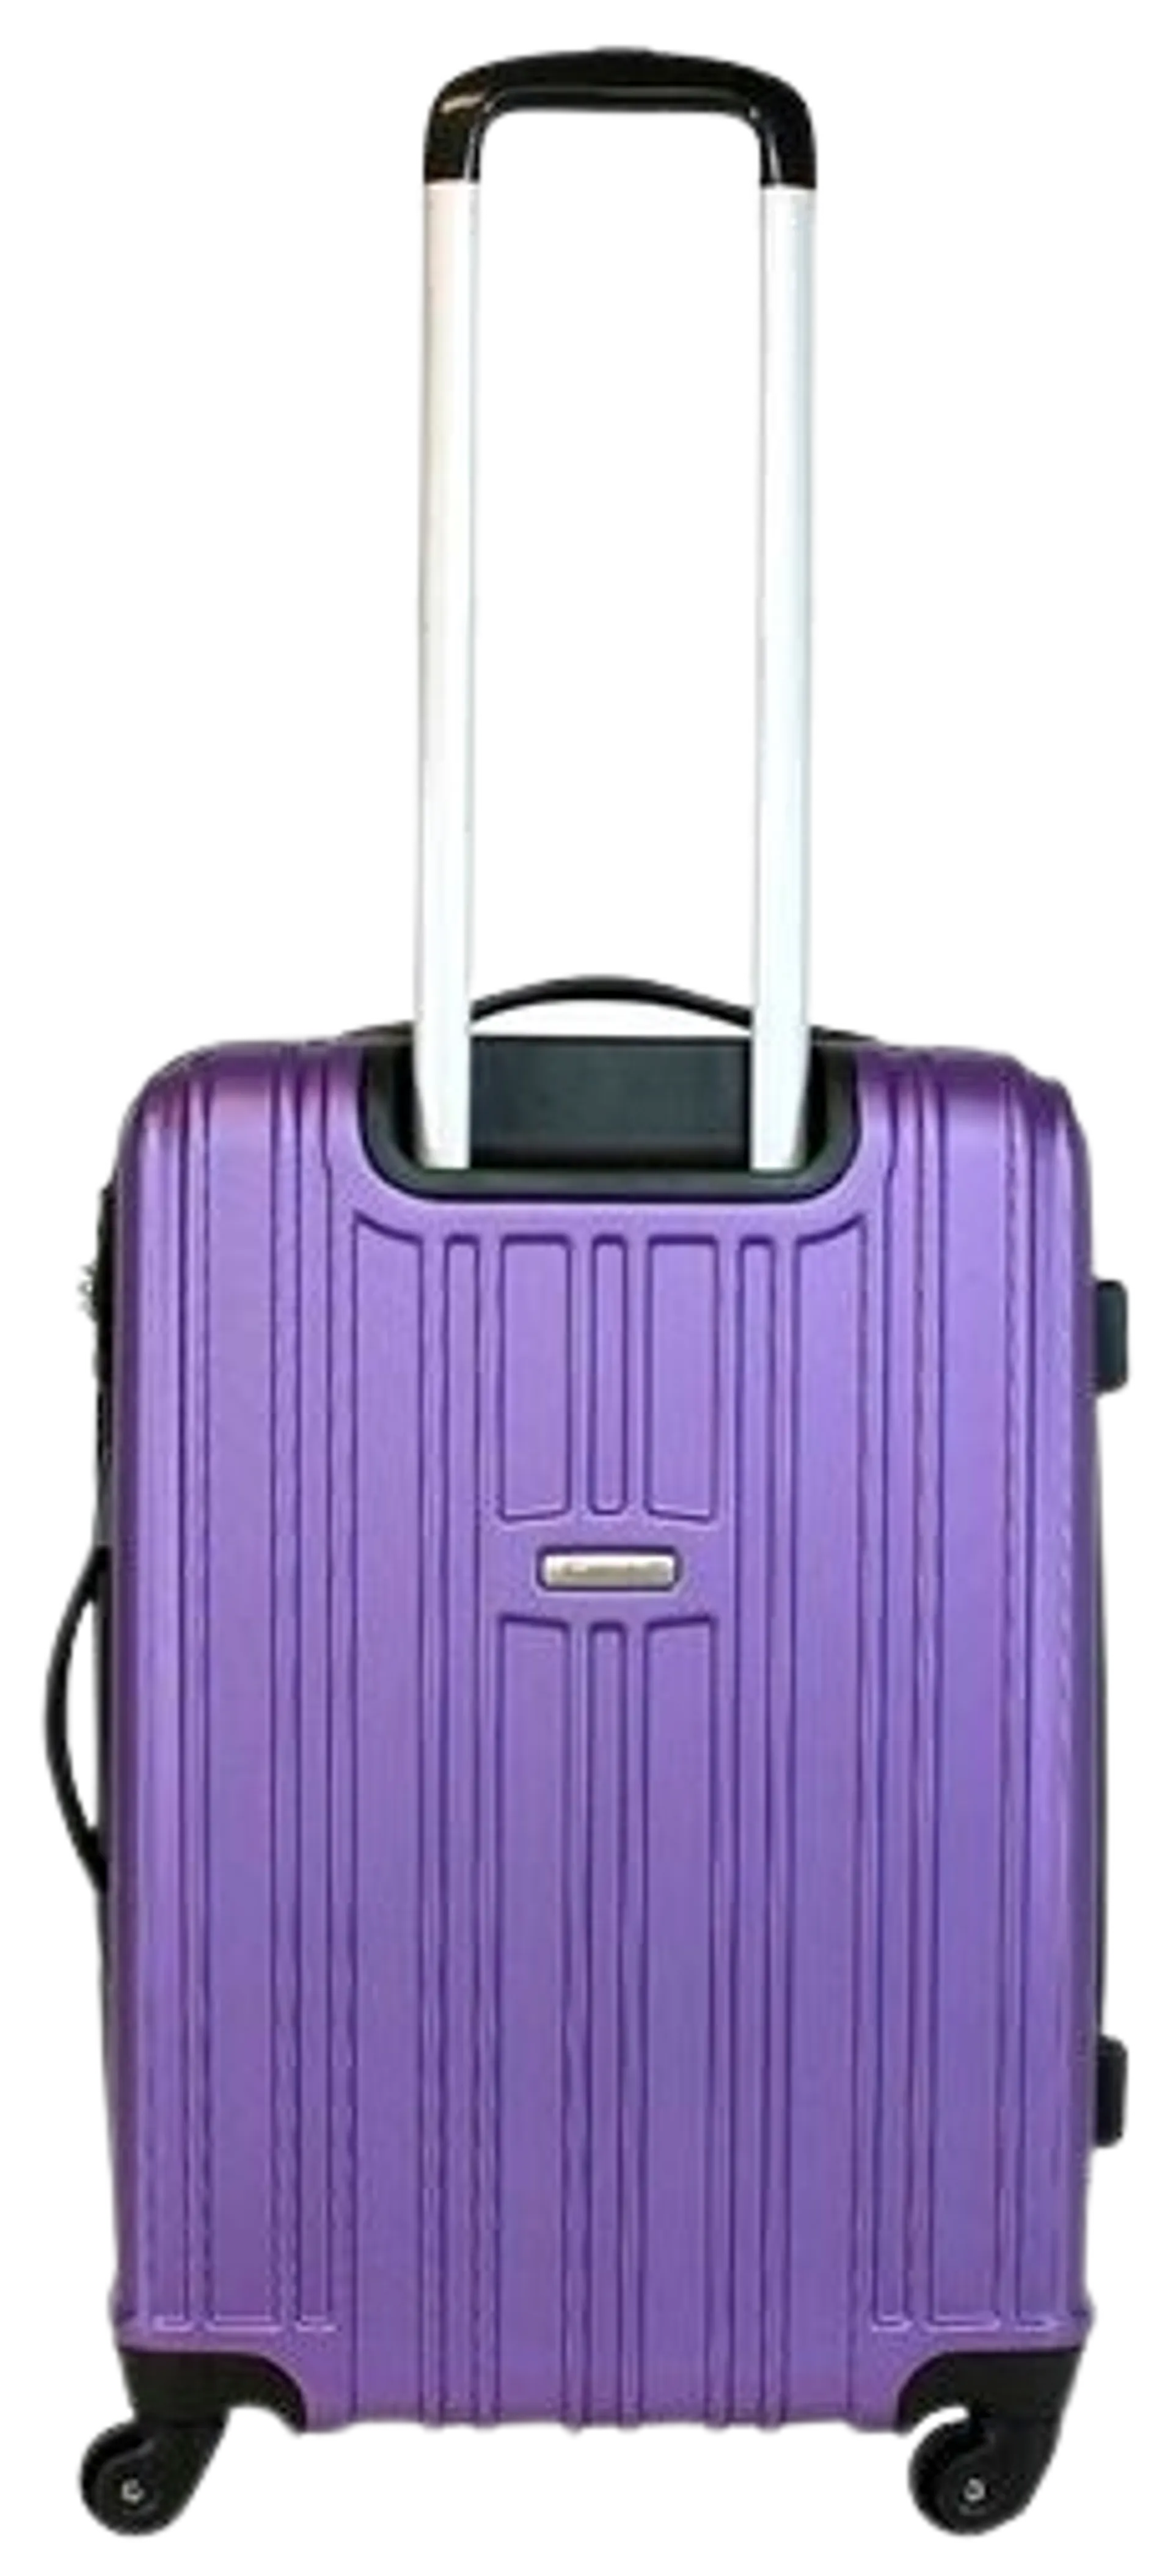 Cavalet Malibu matkalaukku M 64 cm, lila - 2